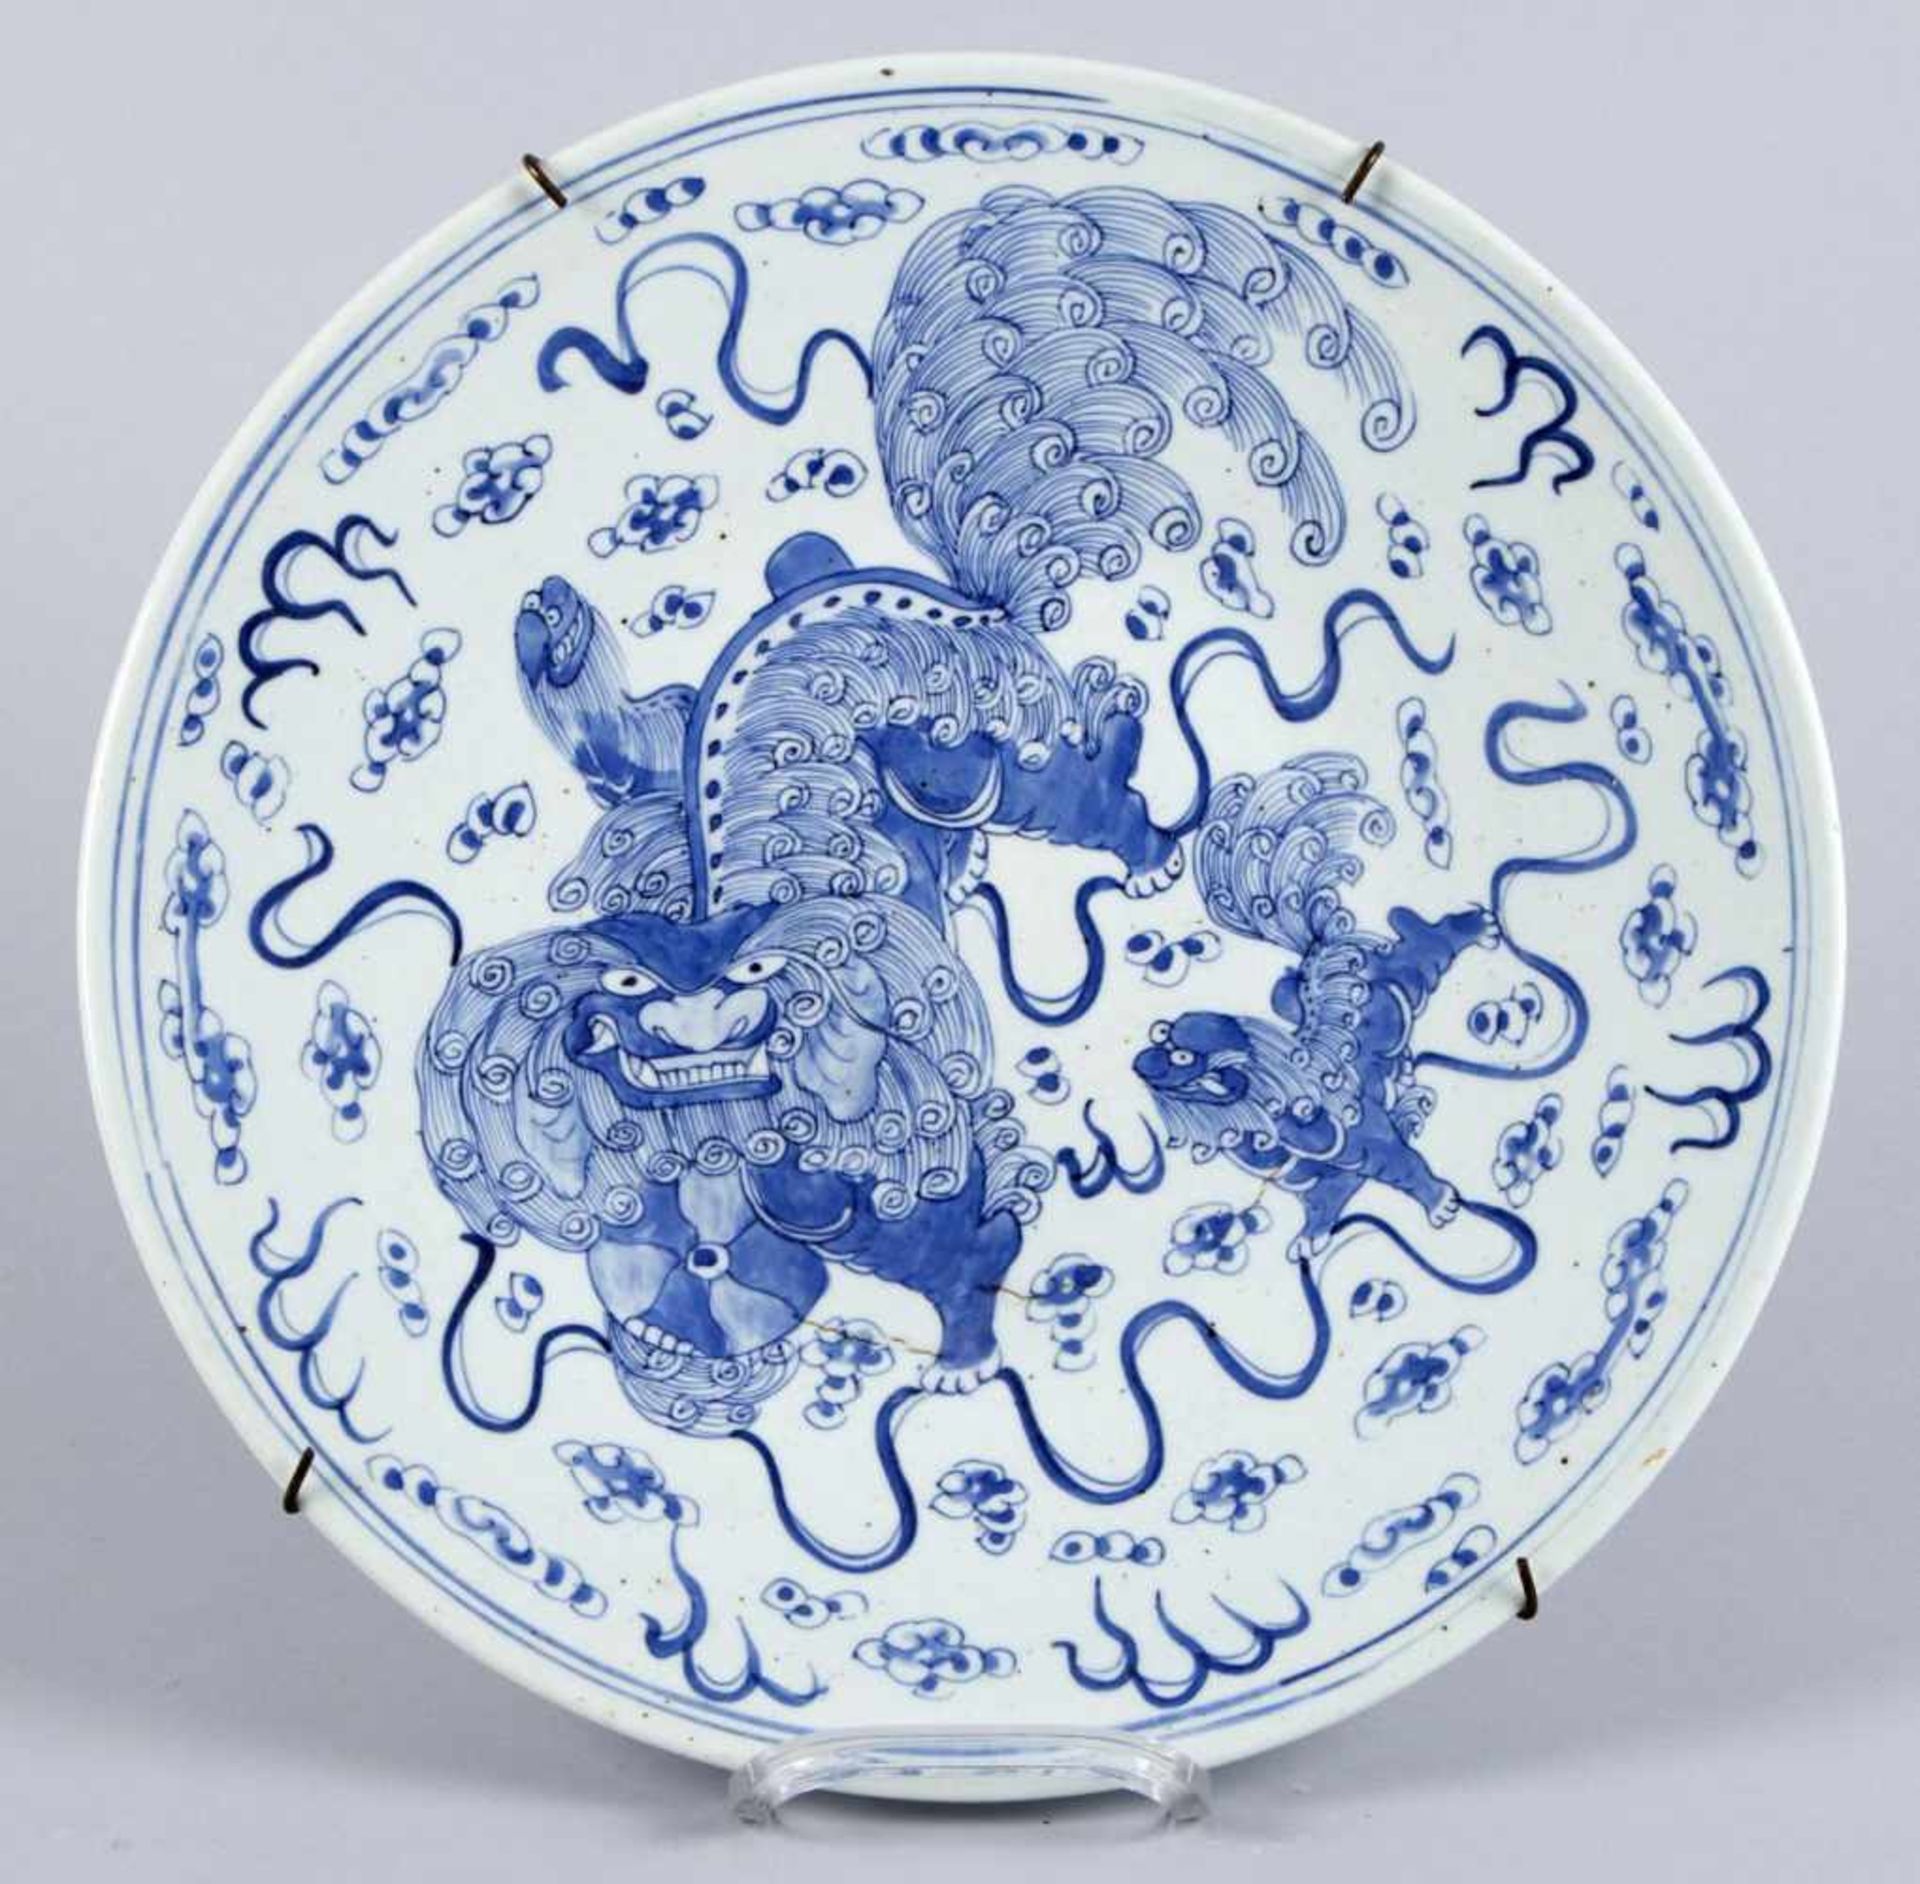 PlattePorzellan. Blauer Dekor mit Fo-Hunden. China. D. 37 cm. Brandrisse.- - -27.00 % buyer's